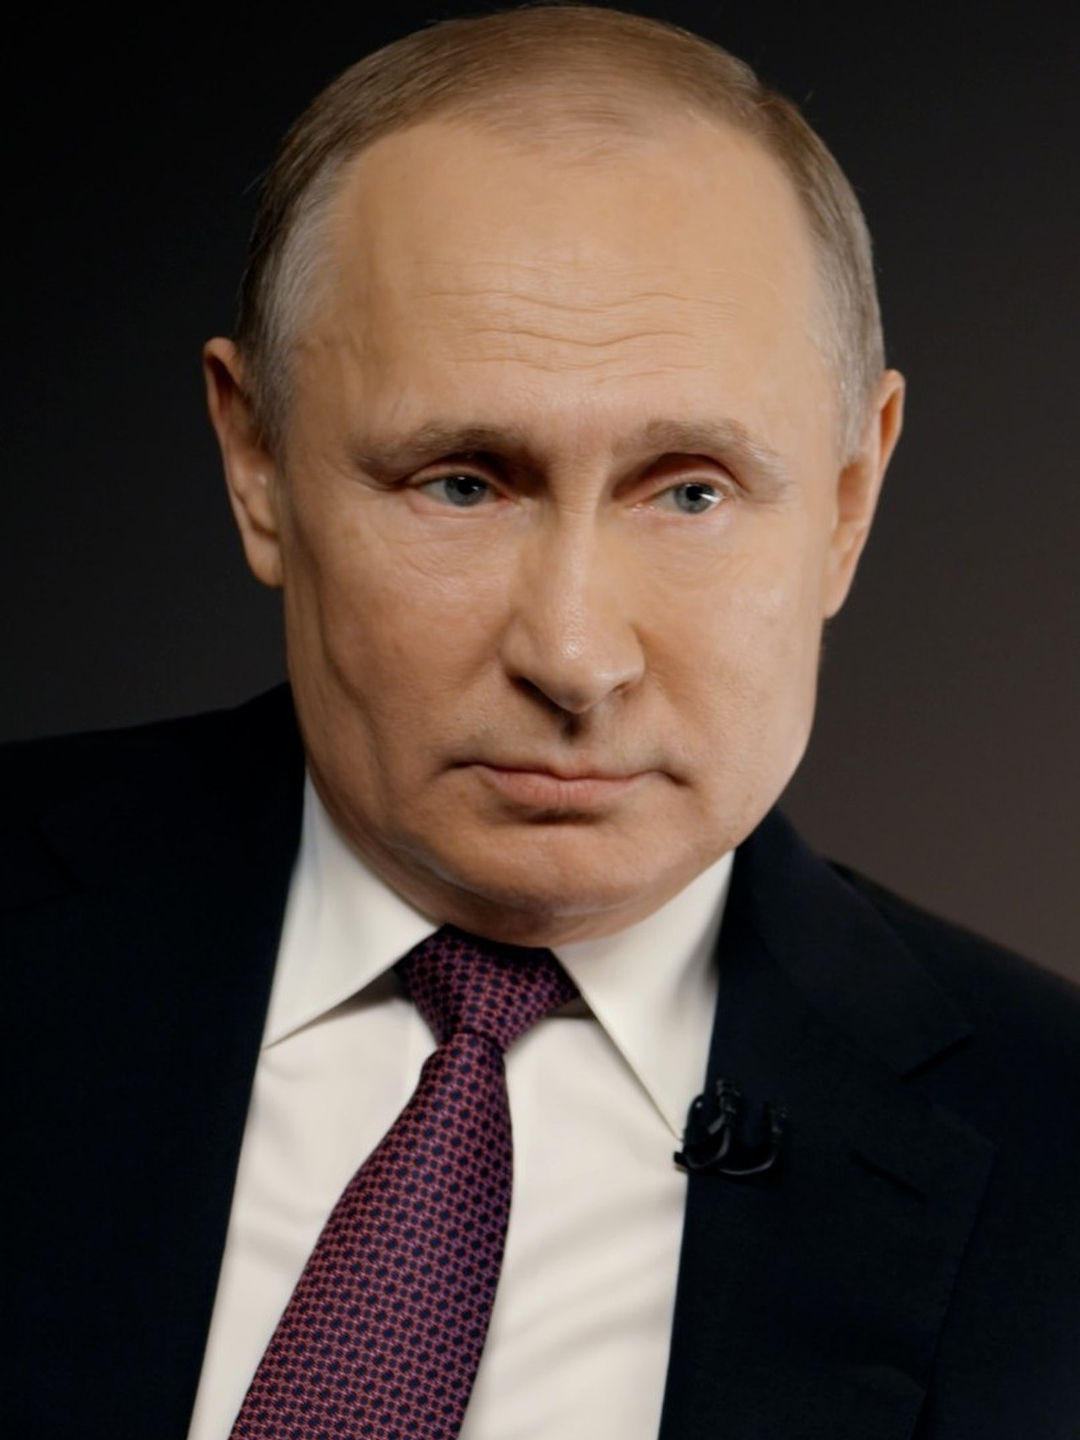 Vladimir Putin who is he